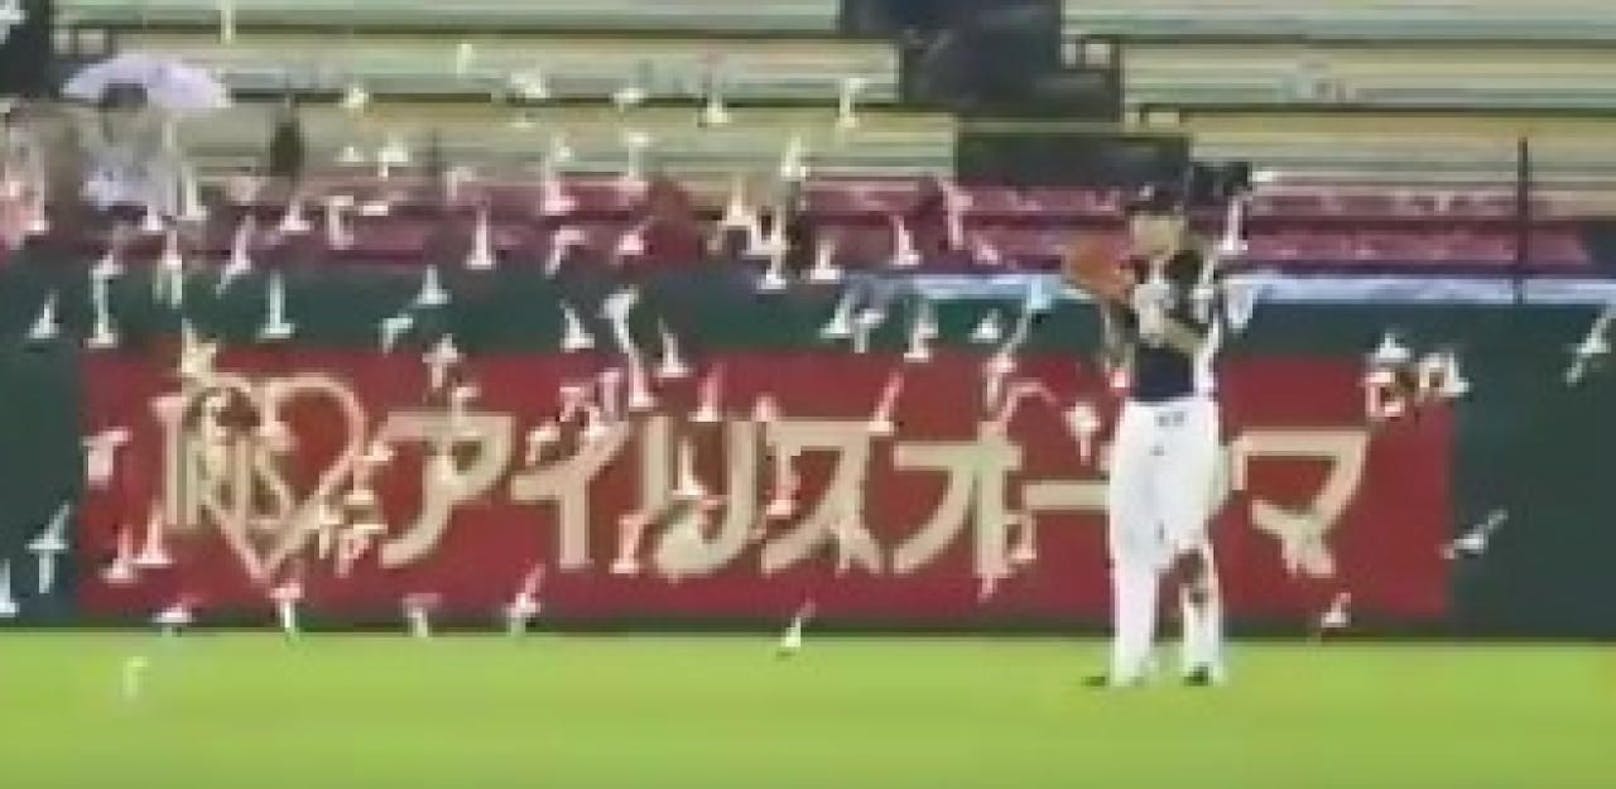 Lästiger Vogelschwarm crasht Baseball-Spiel